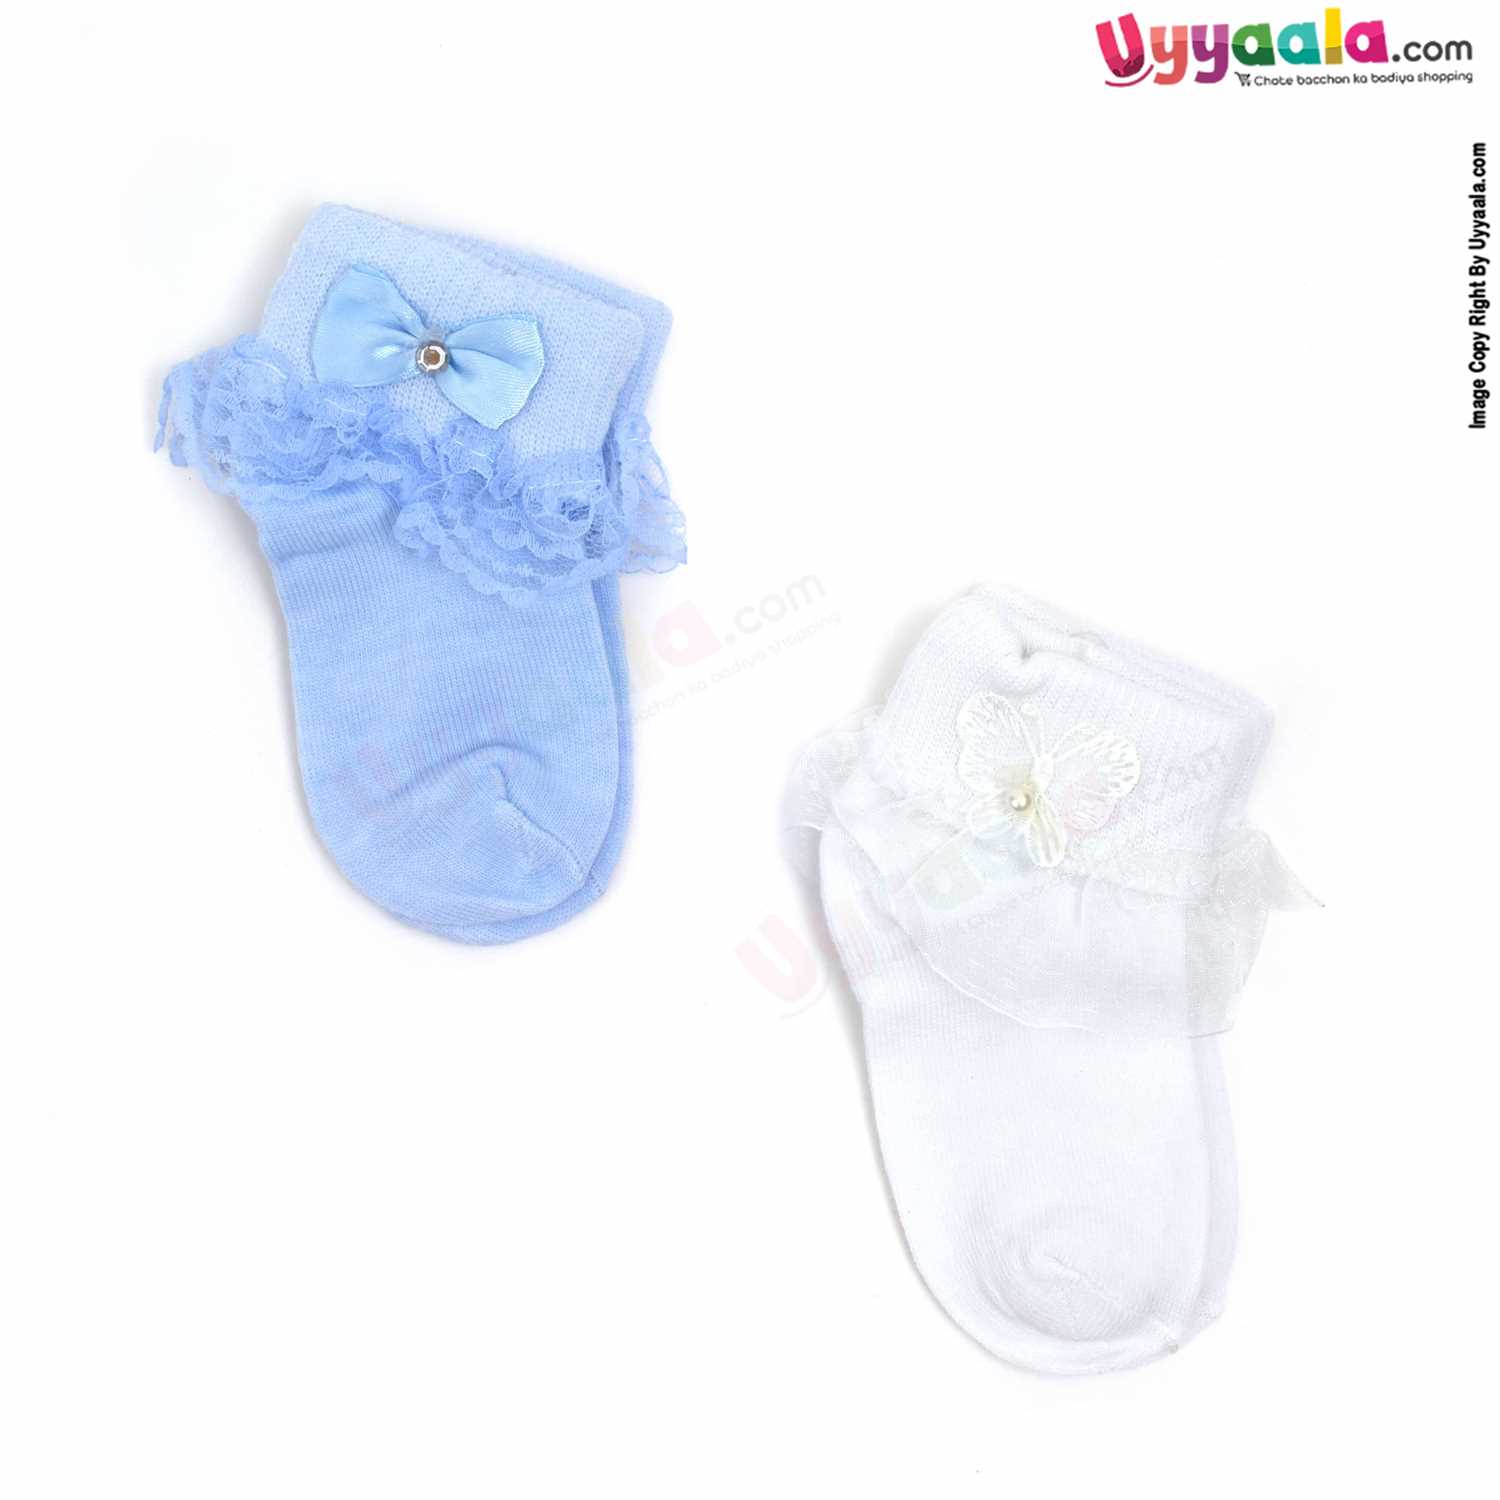 Hosiery Cotton Socks for Baby Girl Pack of 2, 6-18m Age - White & Blue